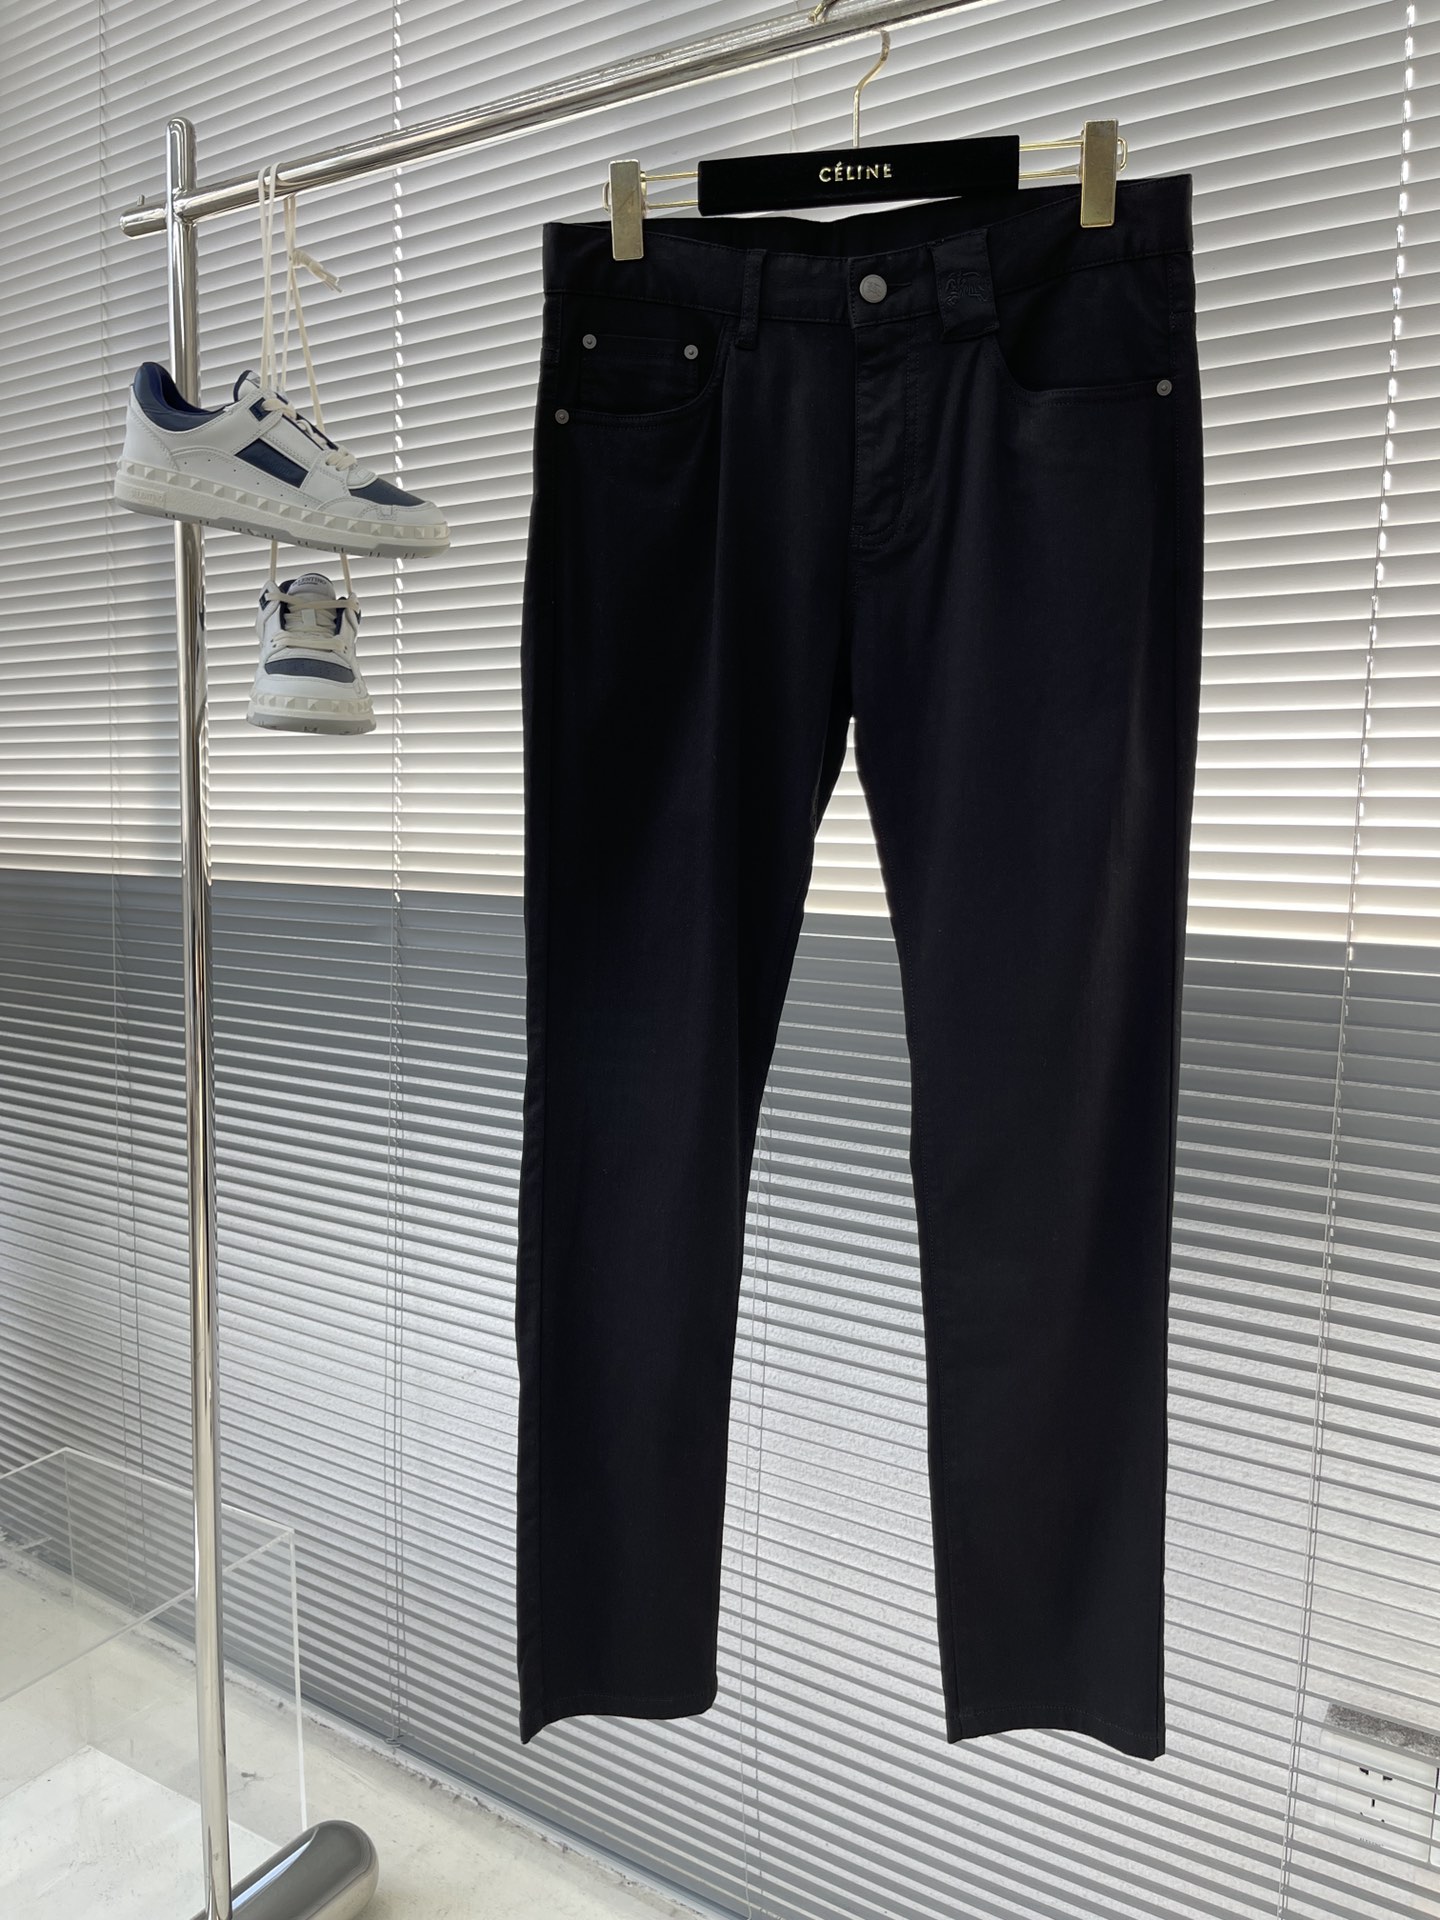 Pzqdbz- BBR 24春夏男士直筒纯色简约透气休闲商务长裤，撤柜牛货，面料非常非常舒服，A00%棉材质，入手真的太舒服了，而且带有微弹力非常好，商务休闲通勤款，日常上班或者出一些重要场合都毫无压力商务休闲的裤子我们卖了很多，但是这种面料还是很少见的，裤型方面也很讲究版型很正，合体直筒剪裁，上身之后不松垮，也不会紧身，刚刚好恰到好处，各种场合，各种年龄，都毫不退缩，无论是老少，都可以轻松驾驭！码数：30-38（️37）